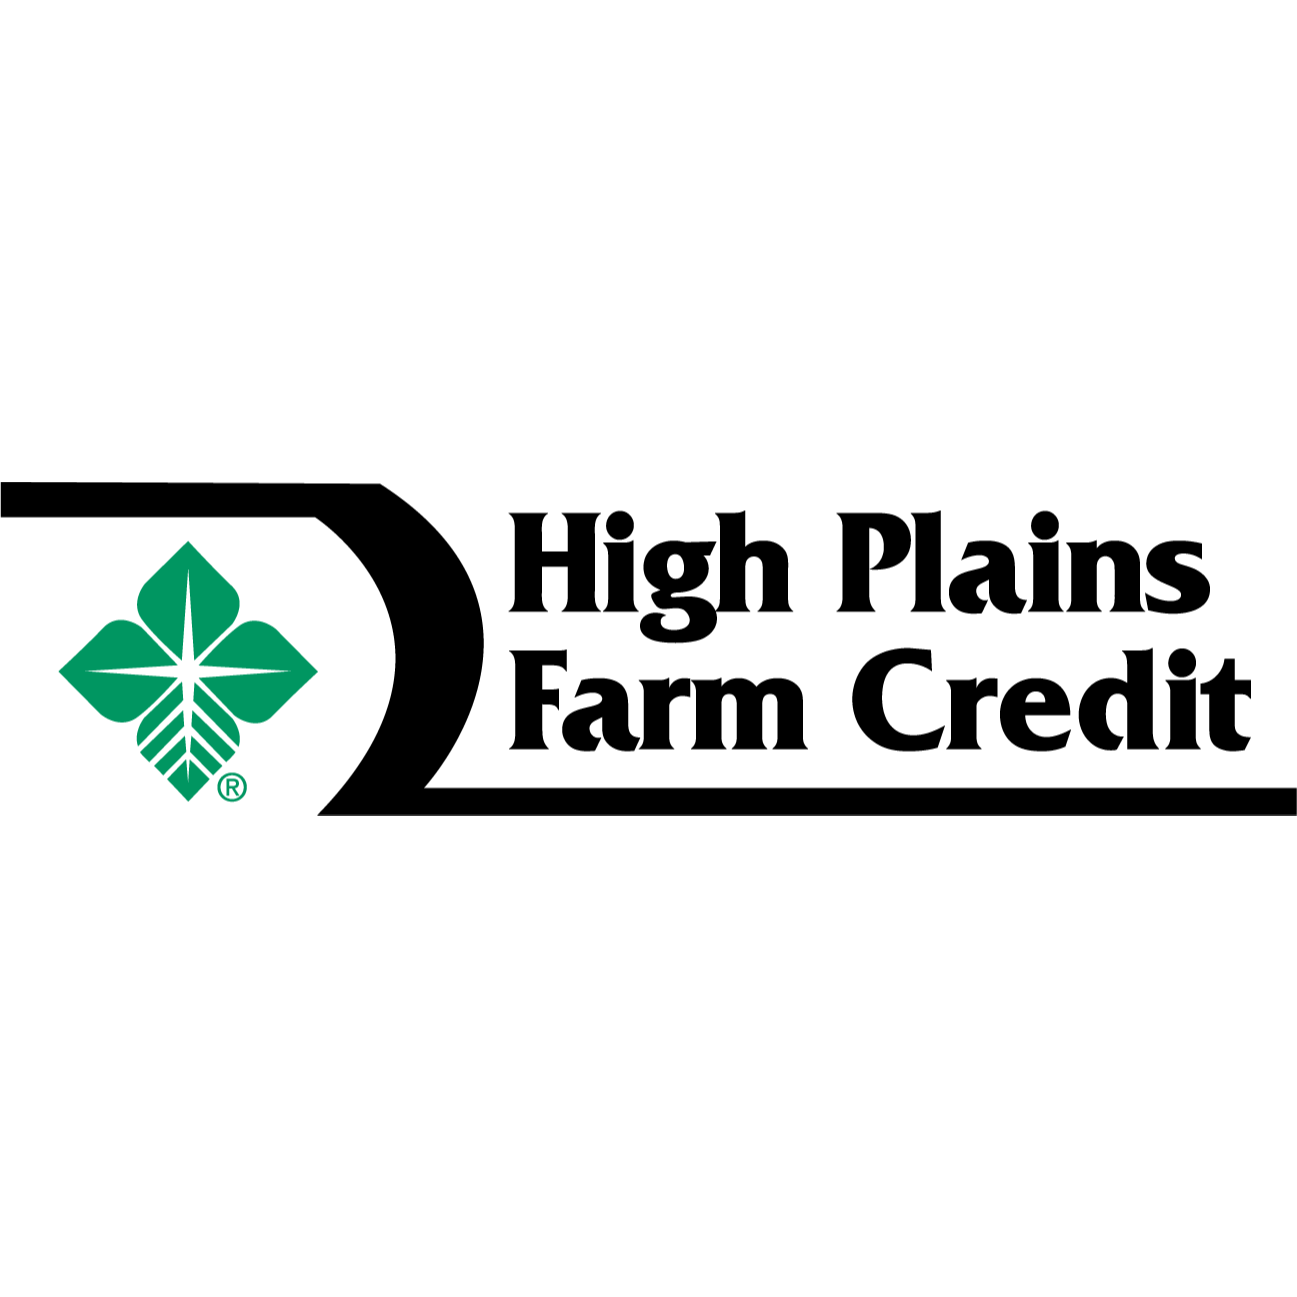 High Plains Farm Credit - Pratt, KS 67124 - (620)672-1265 | ShowMeLocal.com